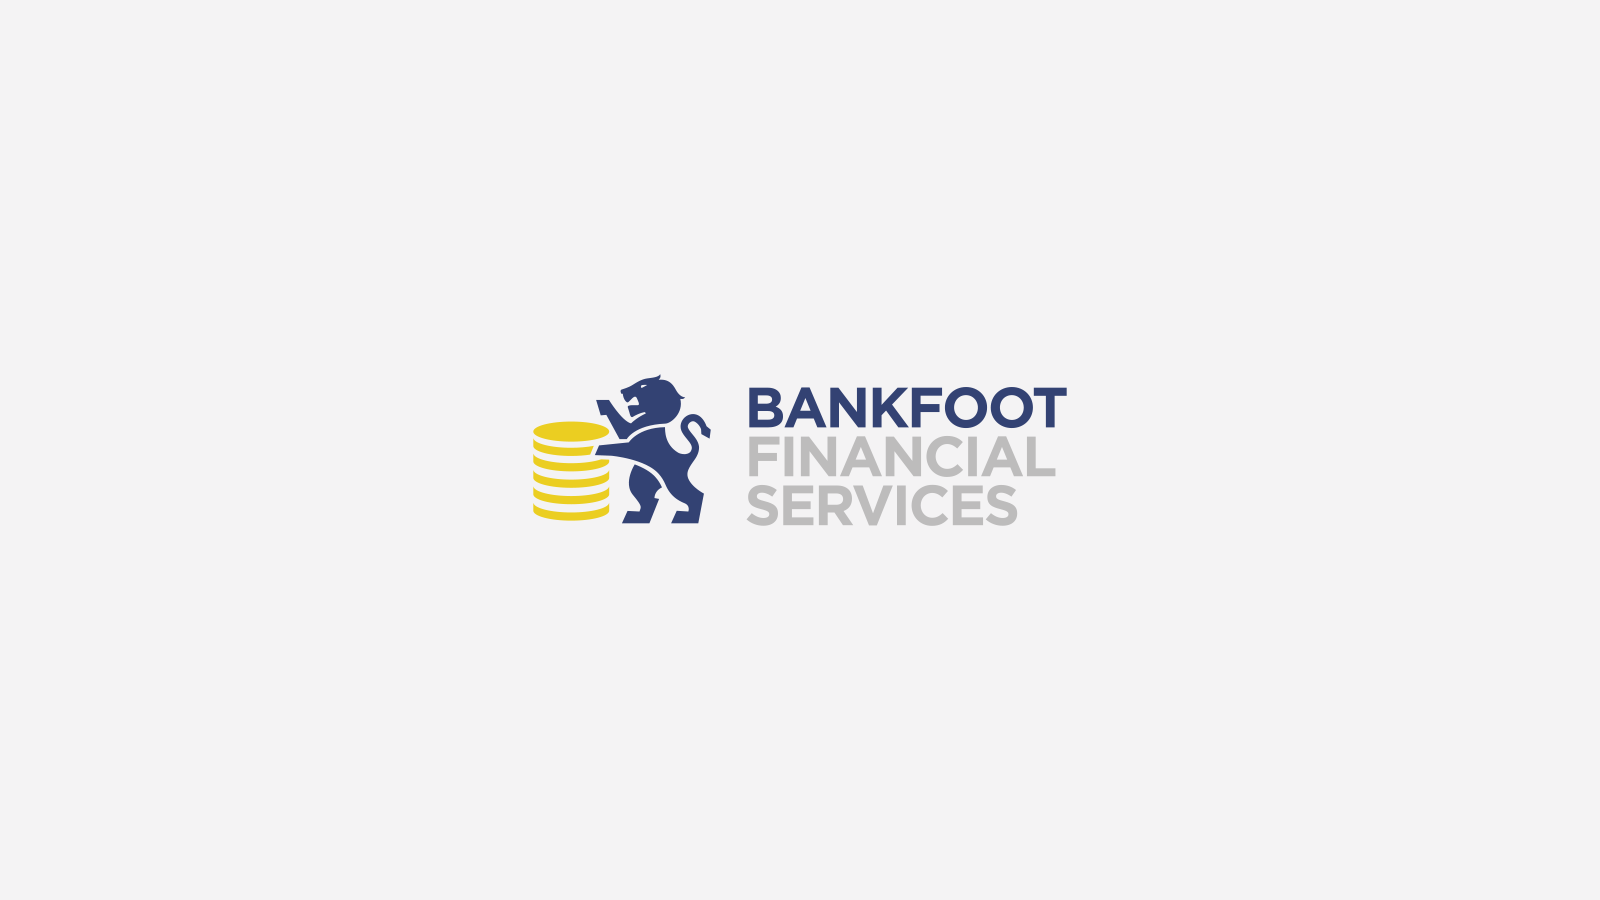 Bankfoot Financial Services Branding Design